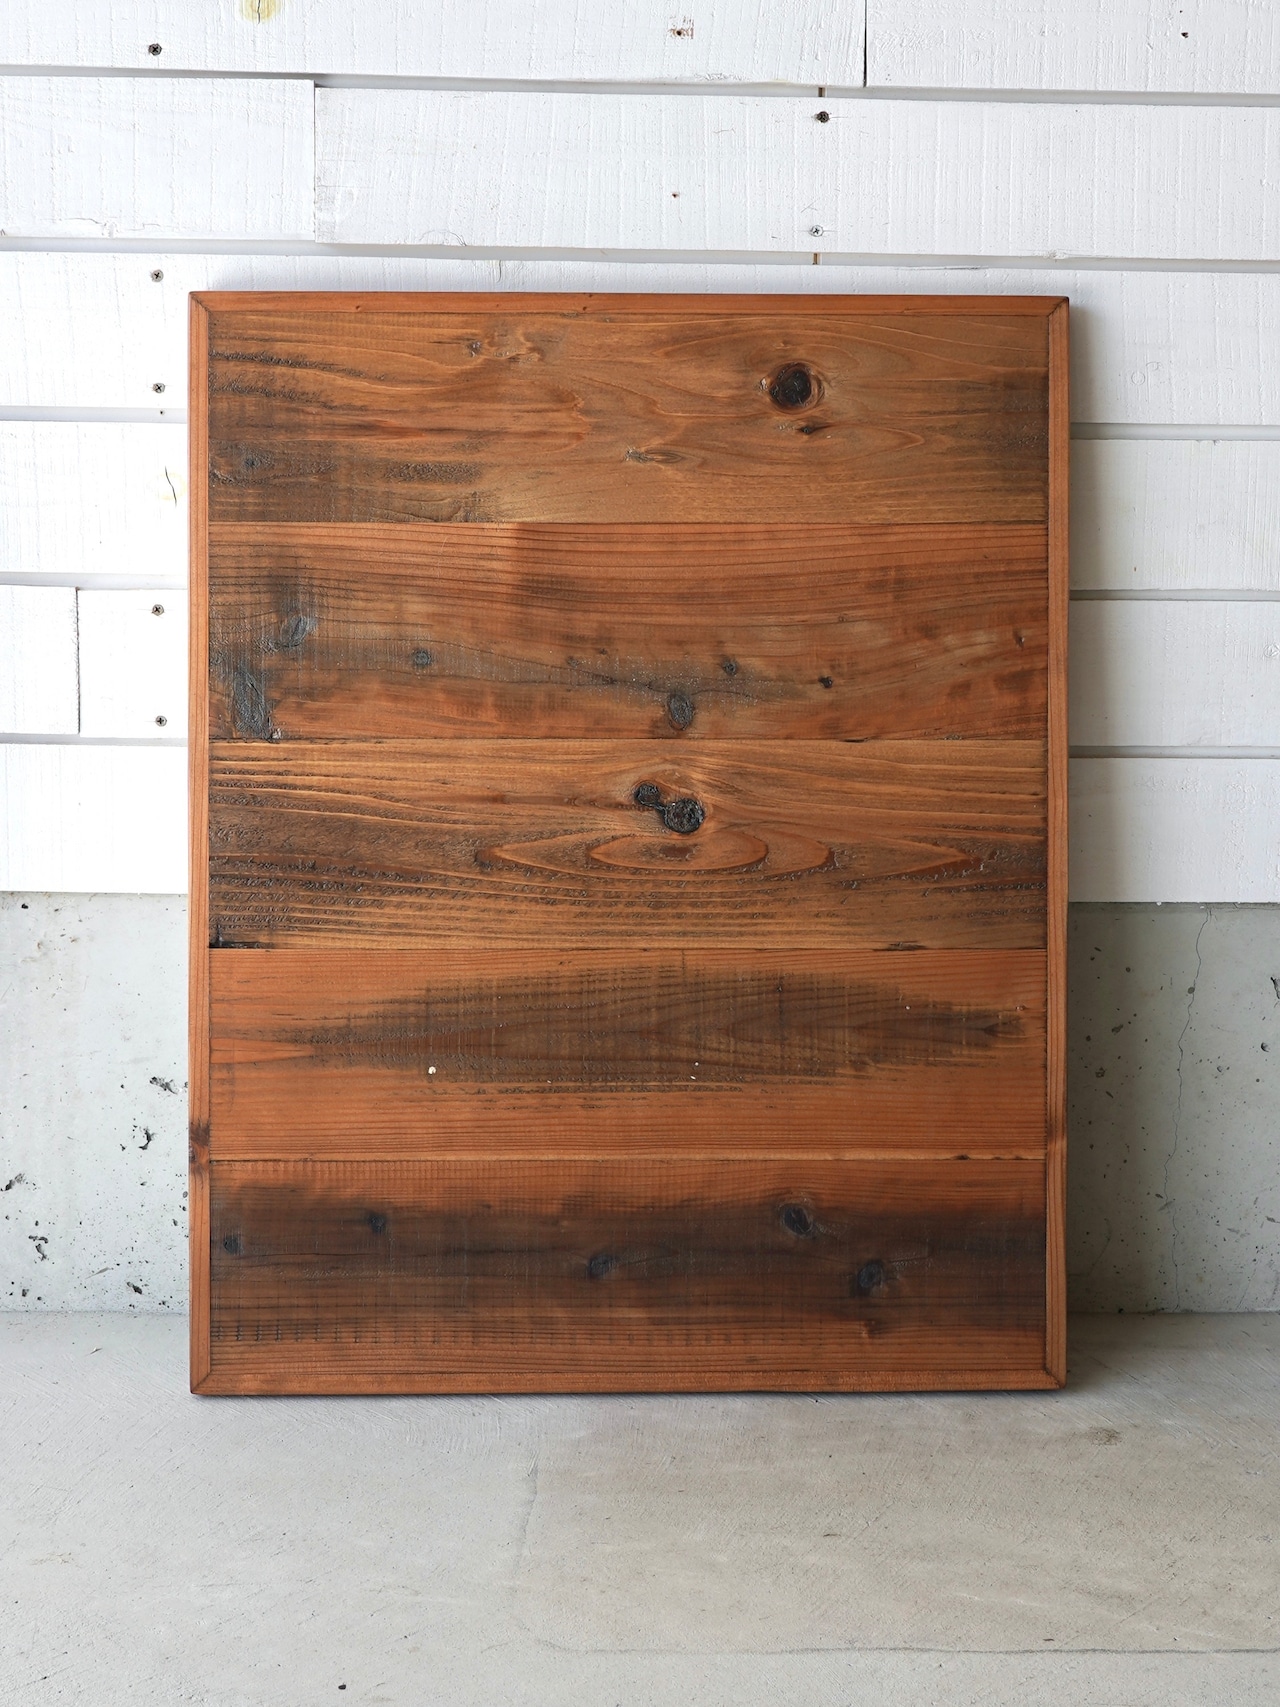 Table top board 〔old lumber〕